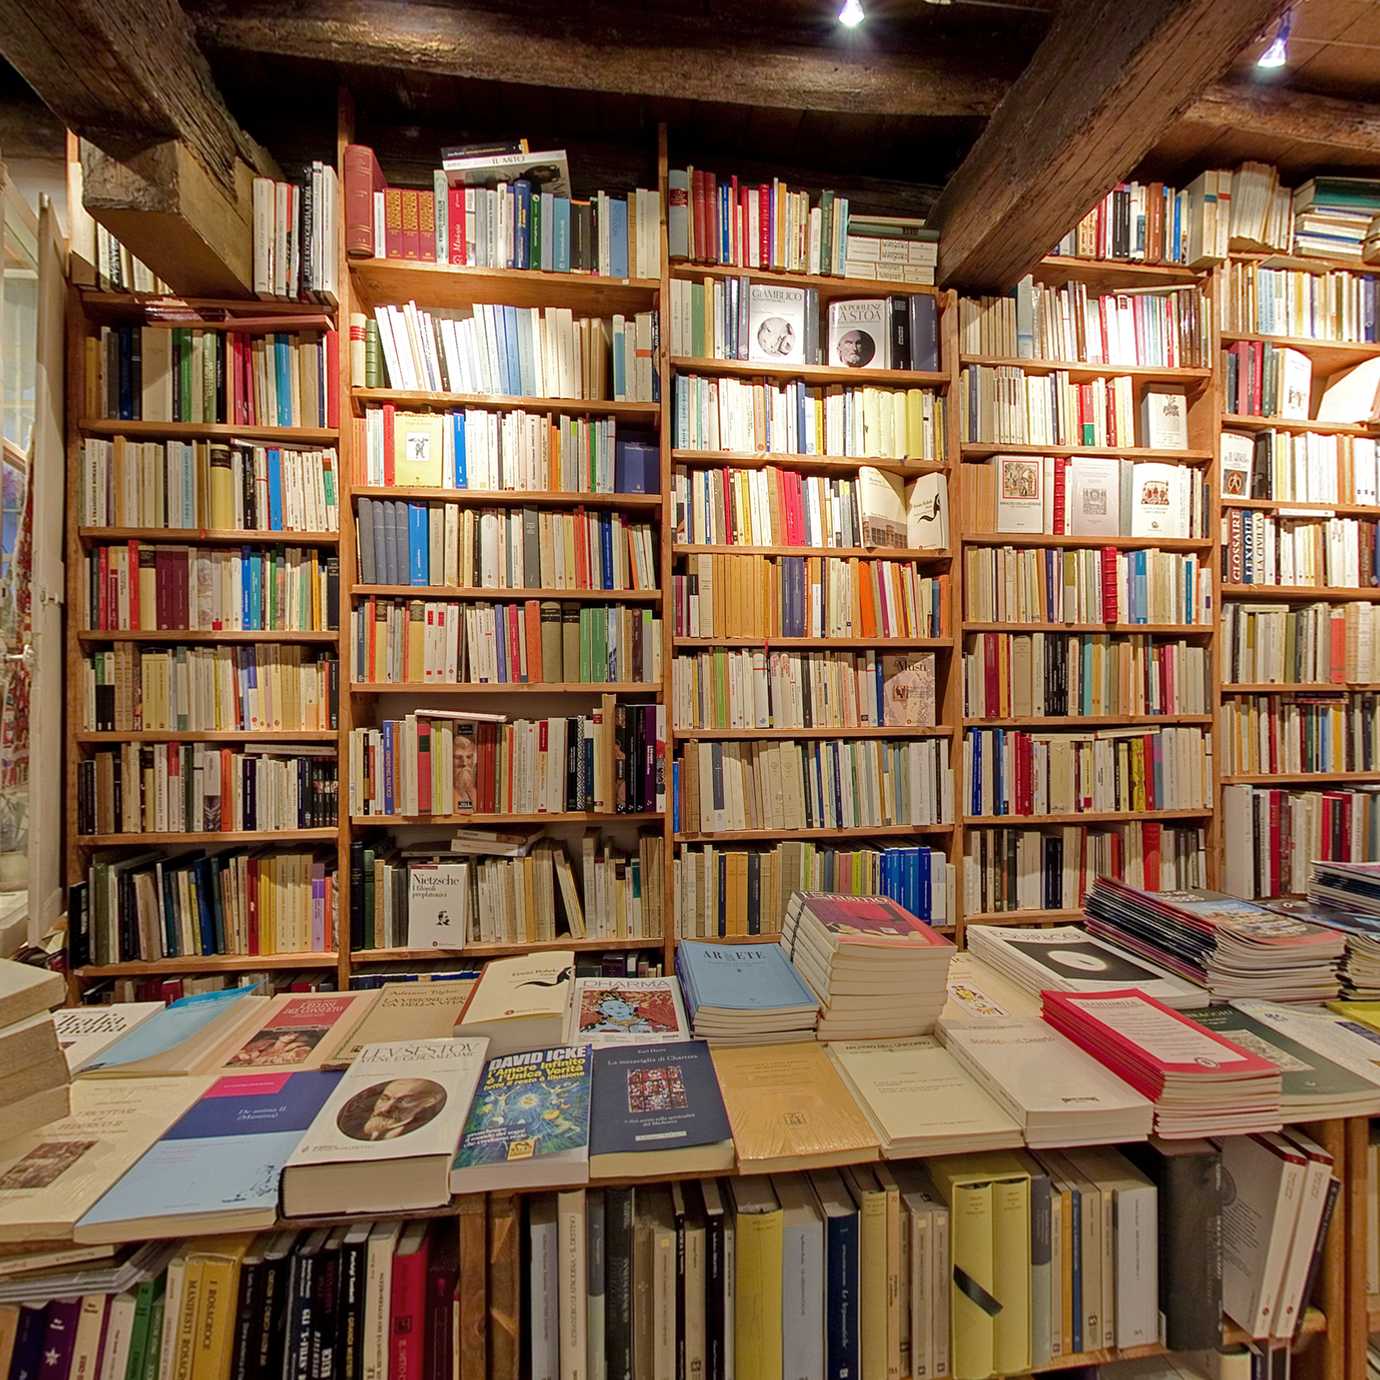 libreria pisa libri vecchi